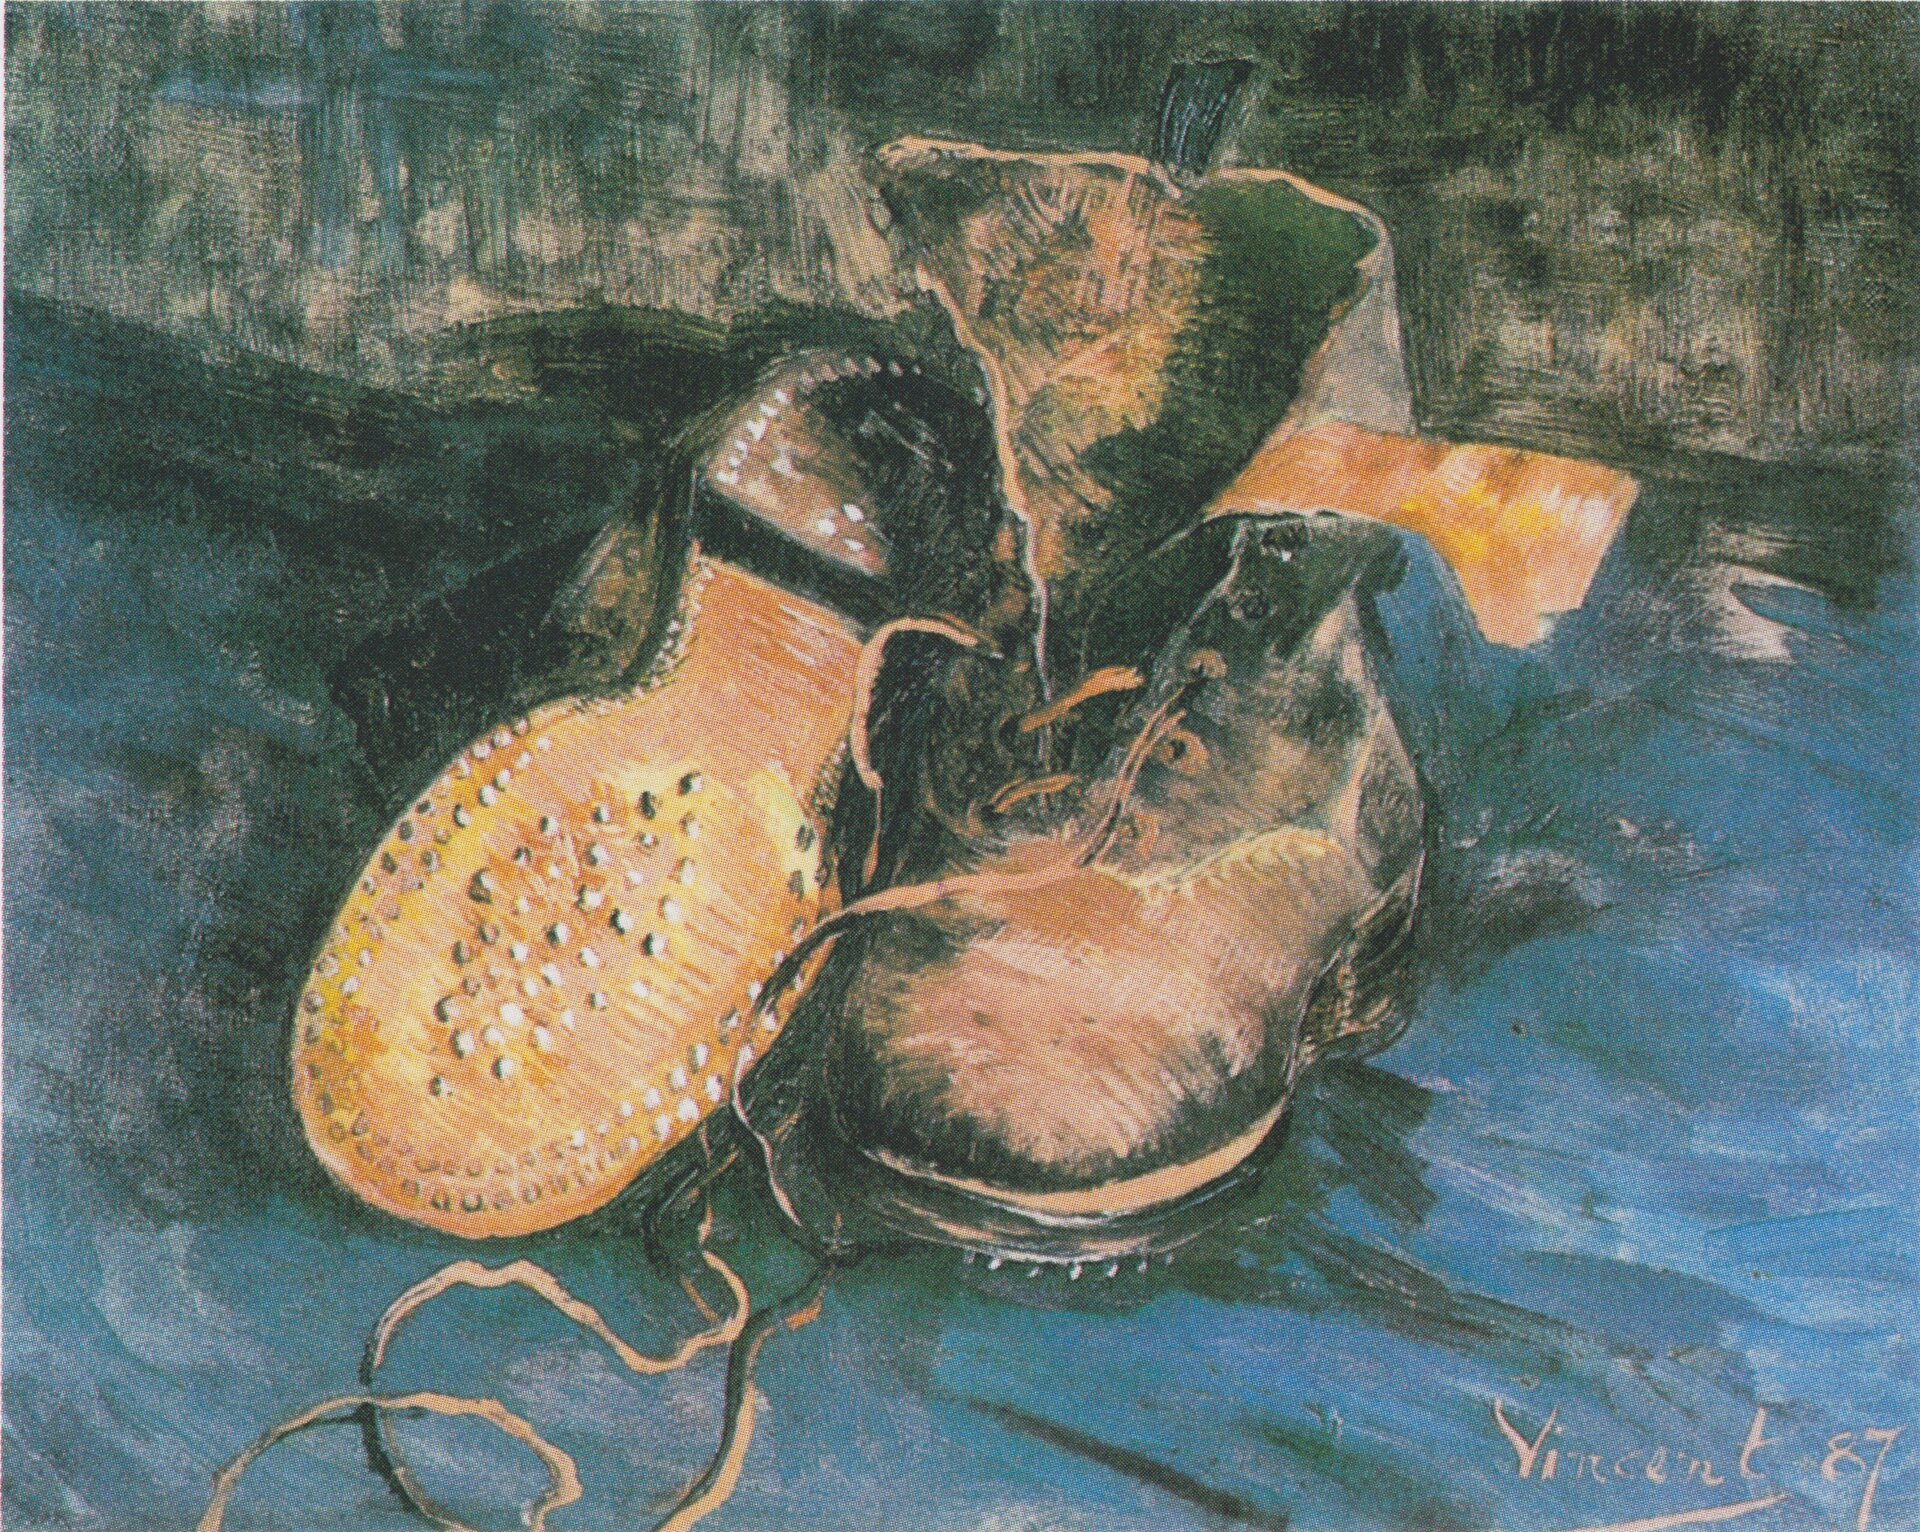 Para butów Źródło: Vincent van Gogh, Para butów, 1887, olej na płótnie, domena publiczna.